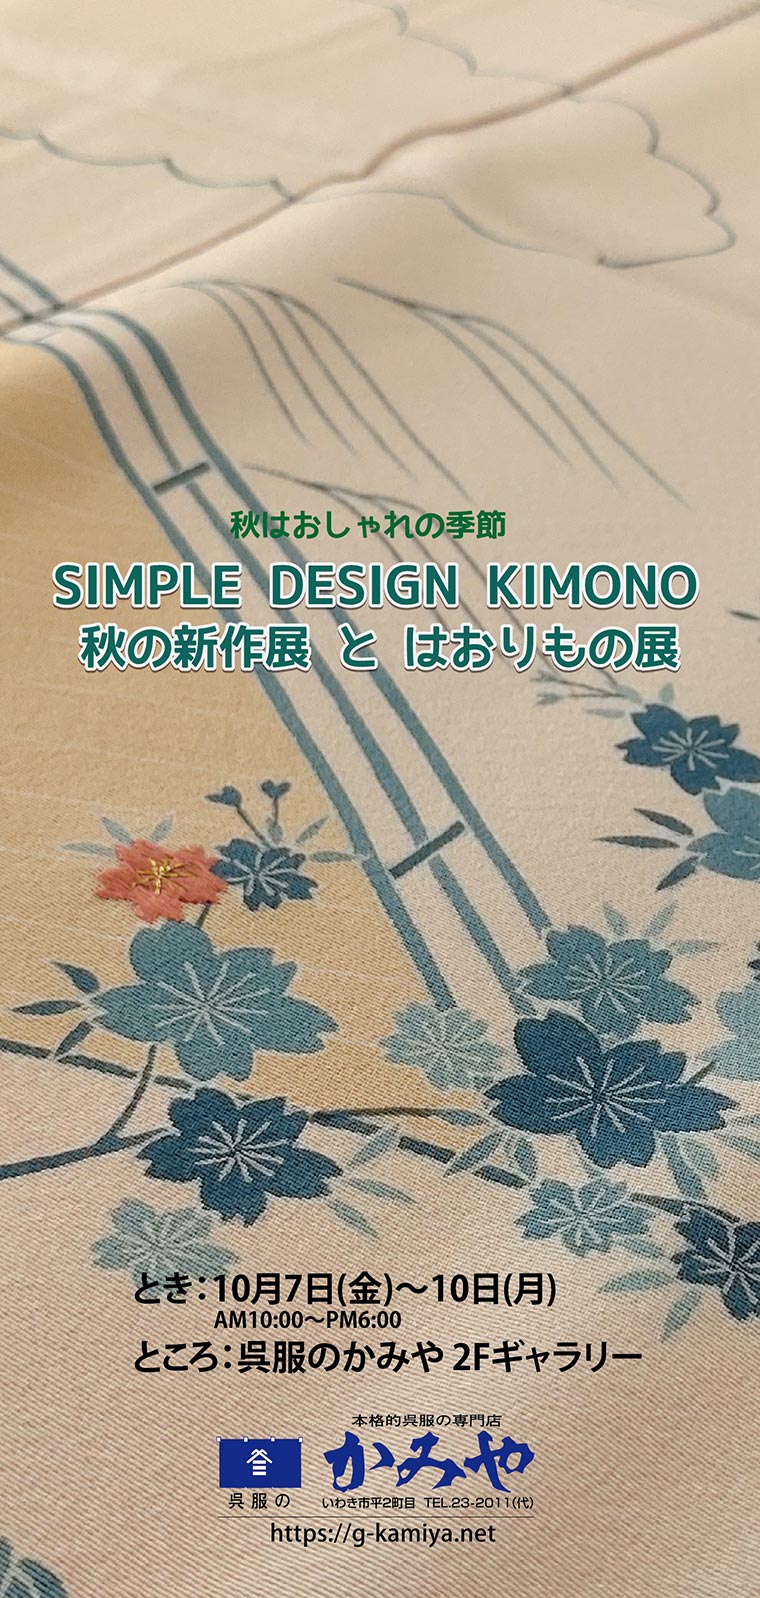 simple design kimono